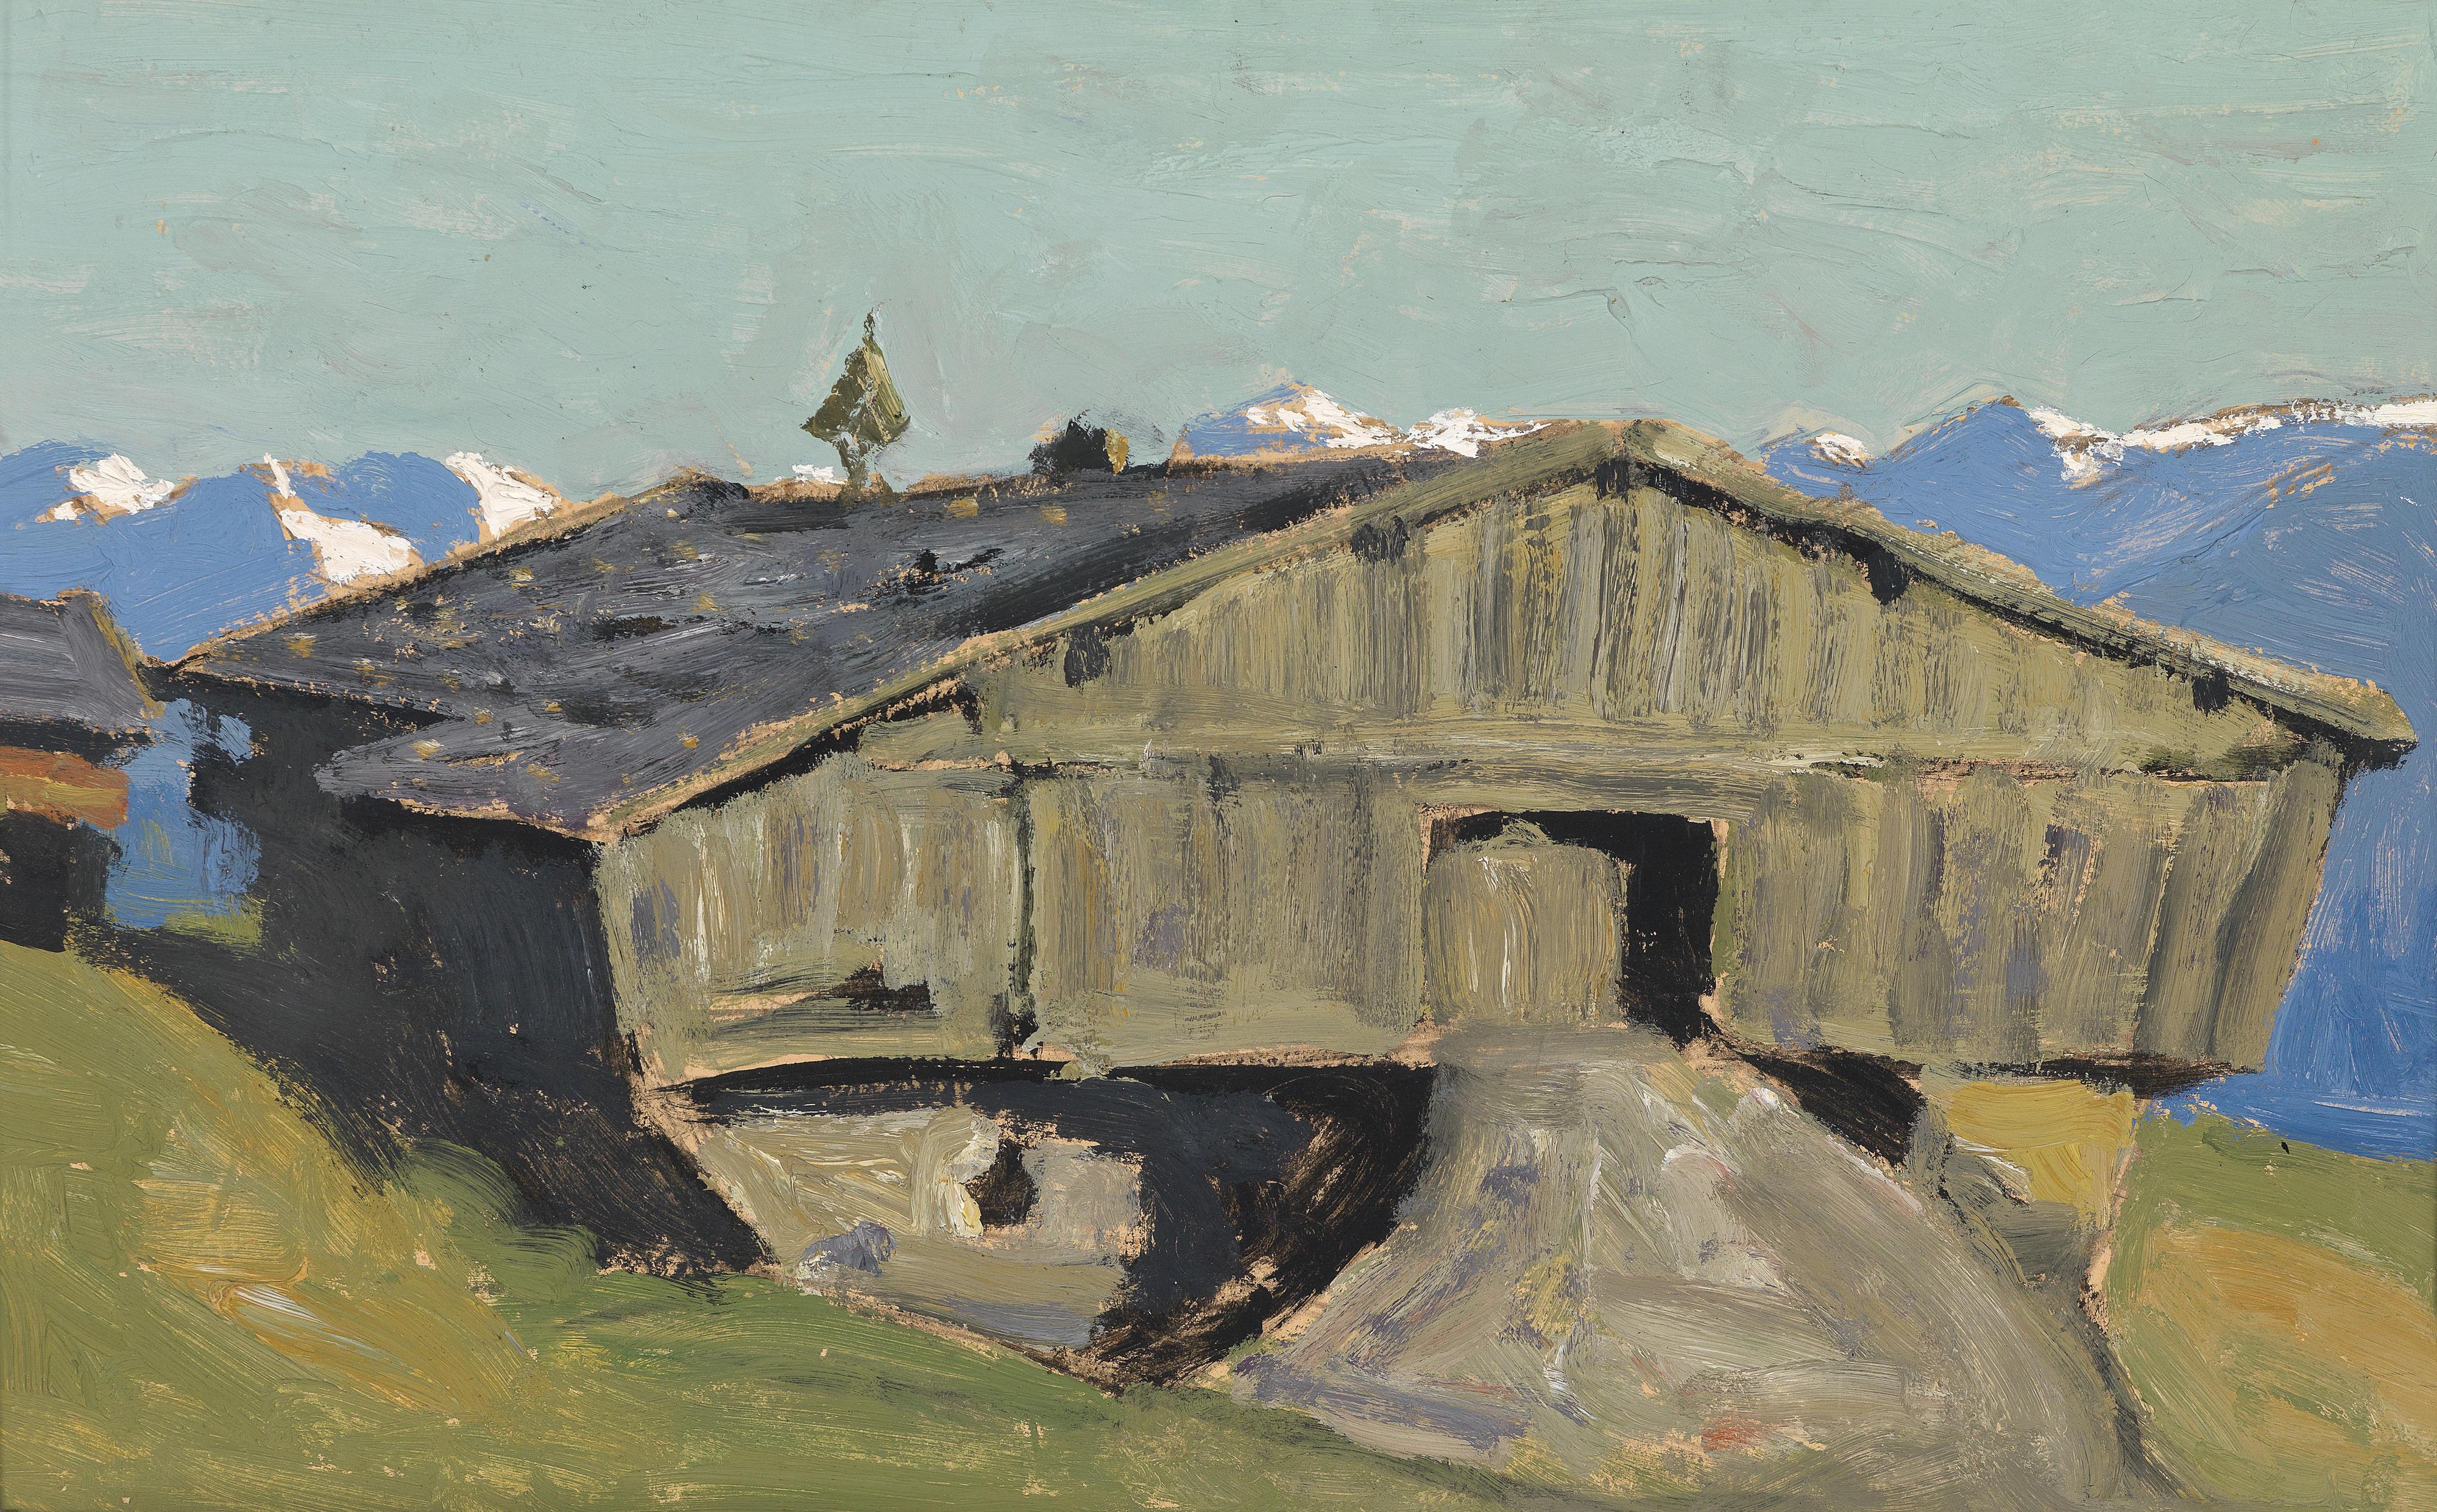 Painting: Alfons Walde, Kitzbühel, Tiroler Bauernhof (Trolean farm), 1920